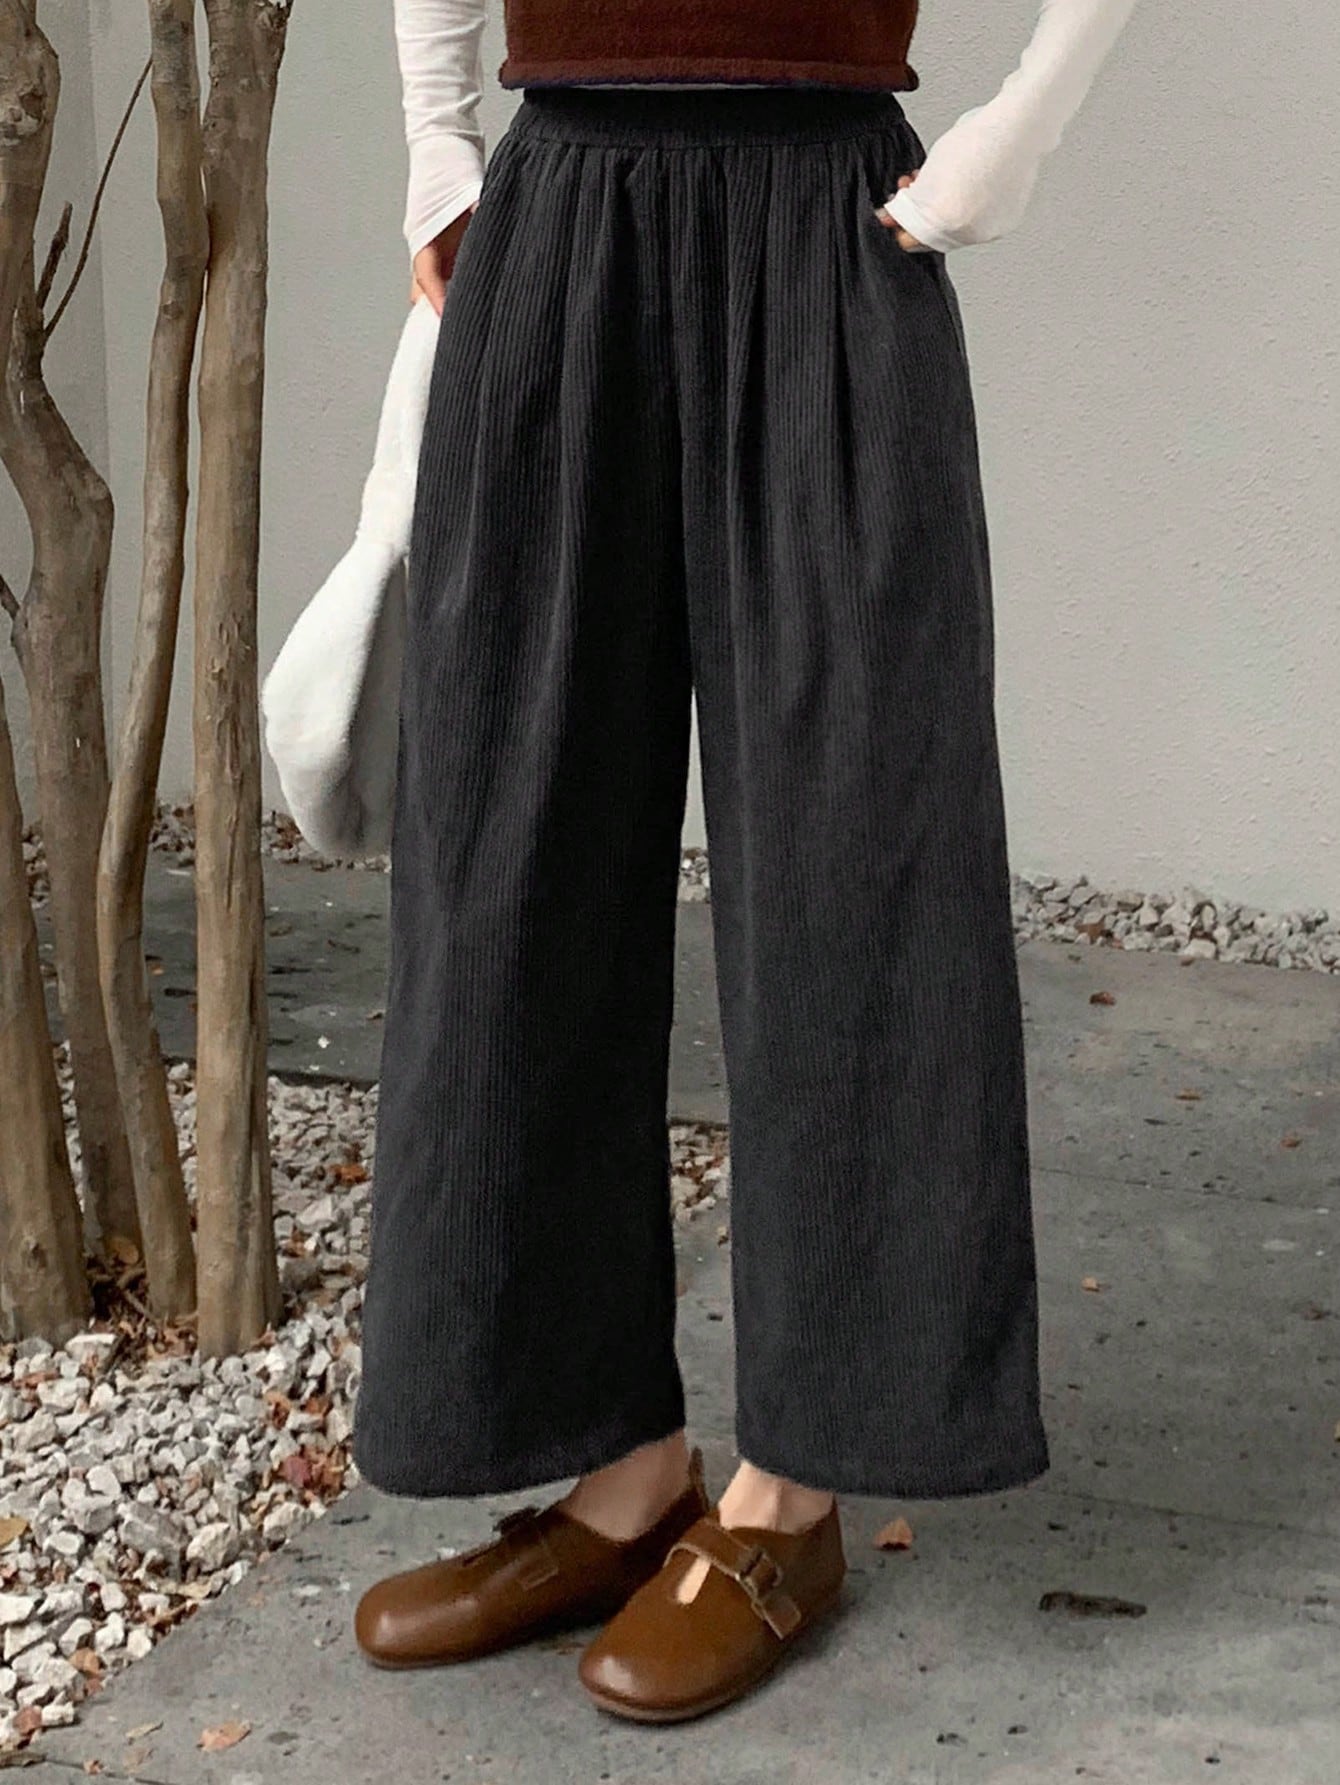 grey Women's Pants - Loose Fitting, Slim, Wide Leg Pants